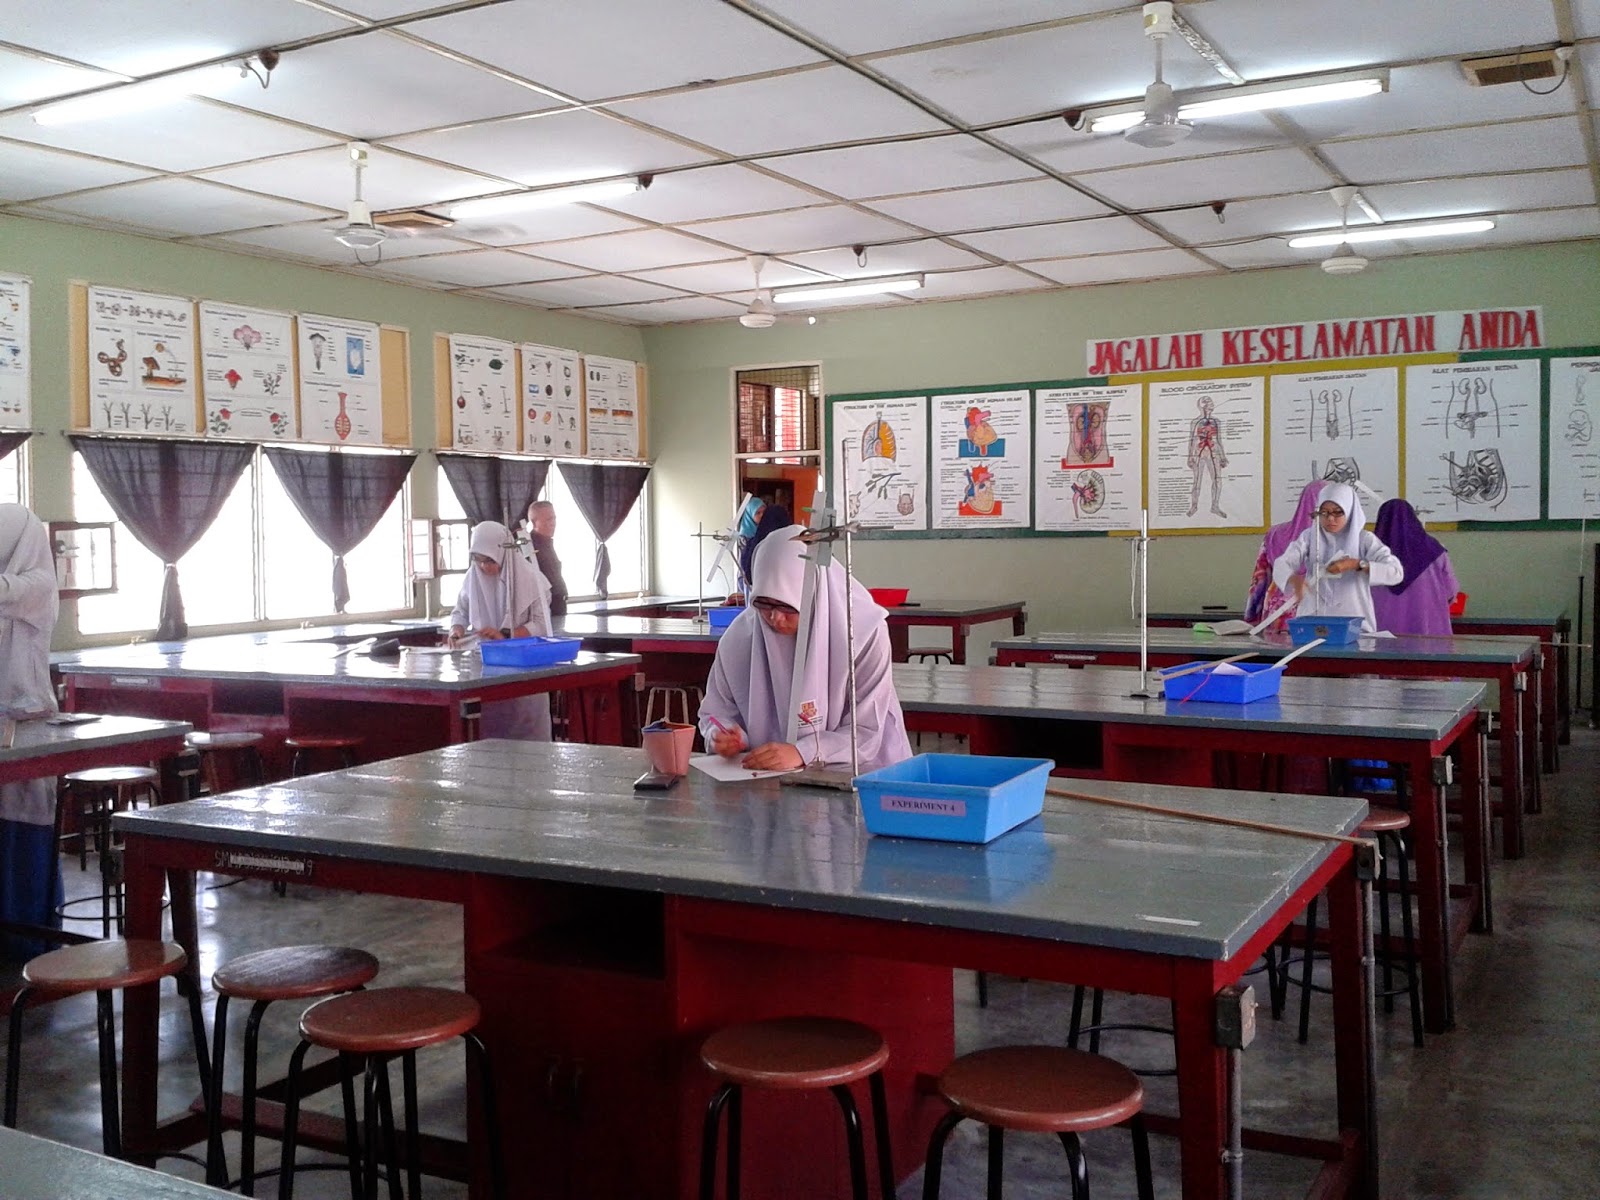 Makmal Sains Sekolah: PRA AMALI FIZIK TINGKATAN 4 2014